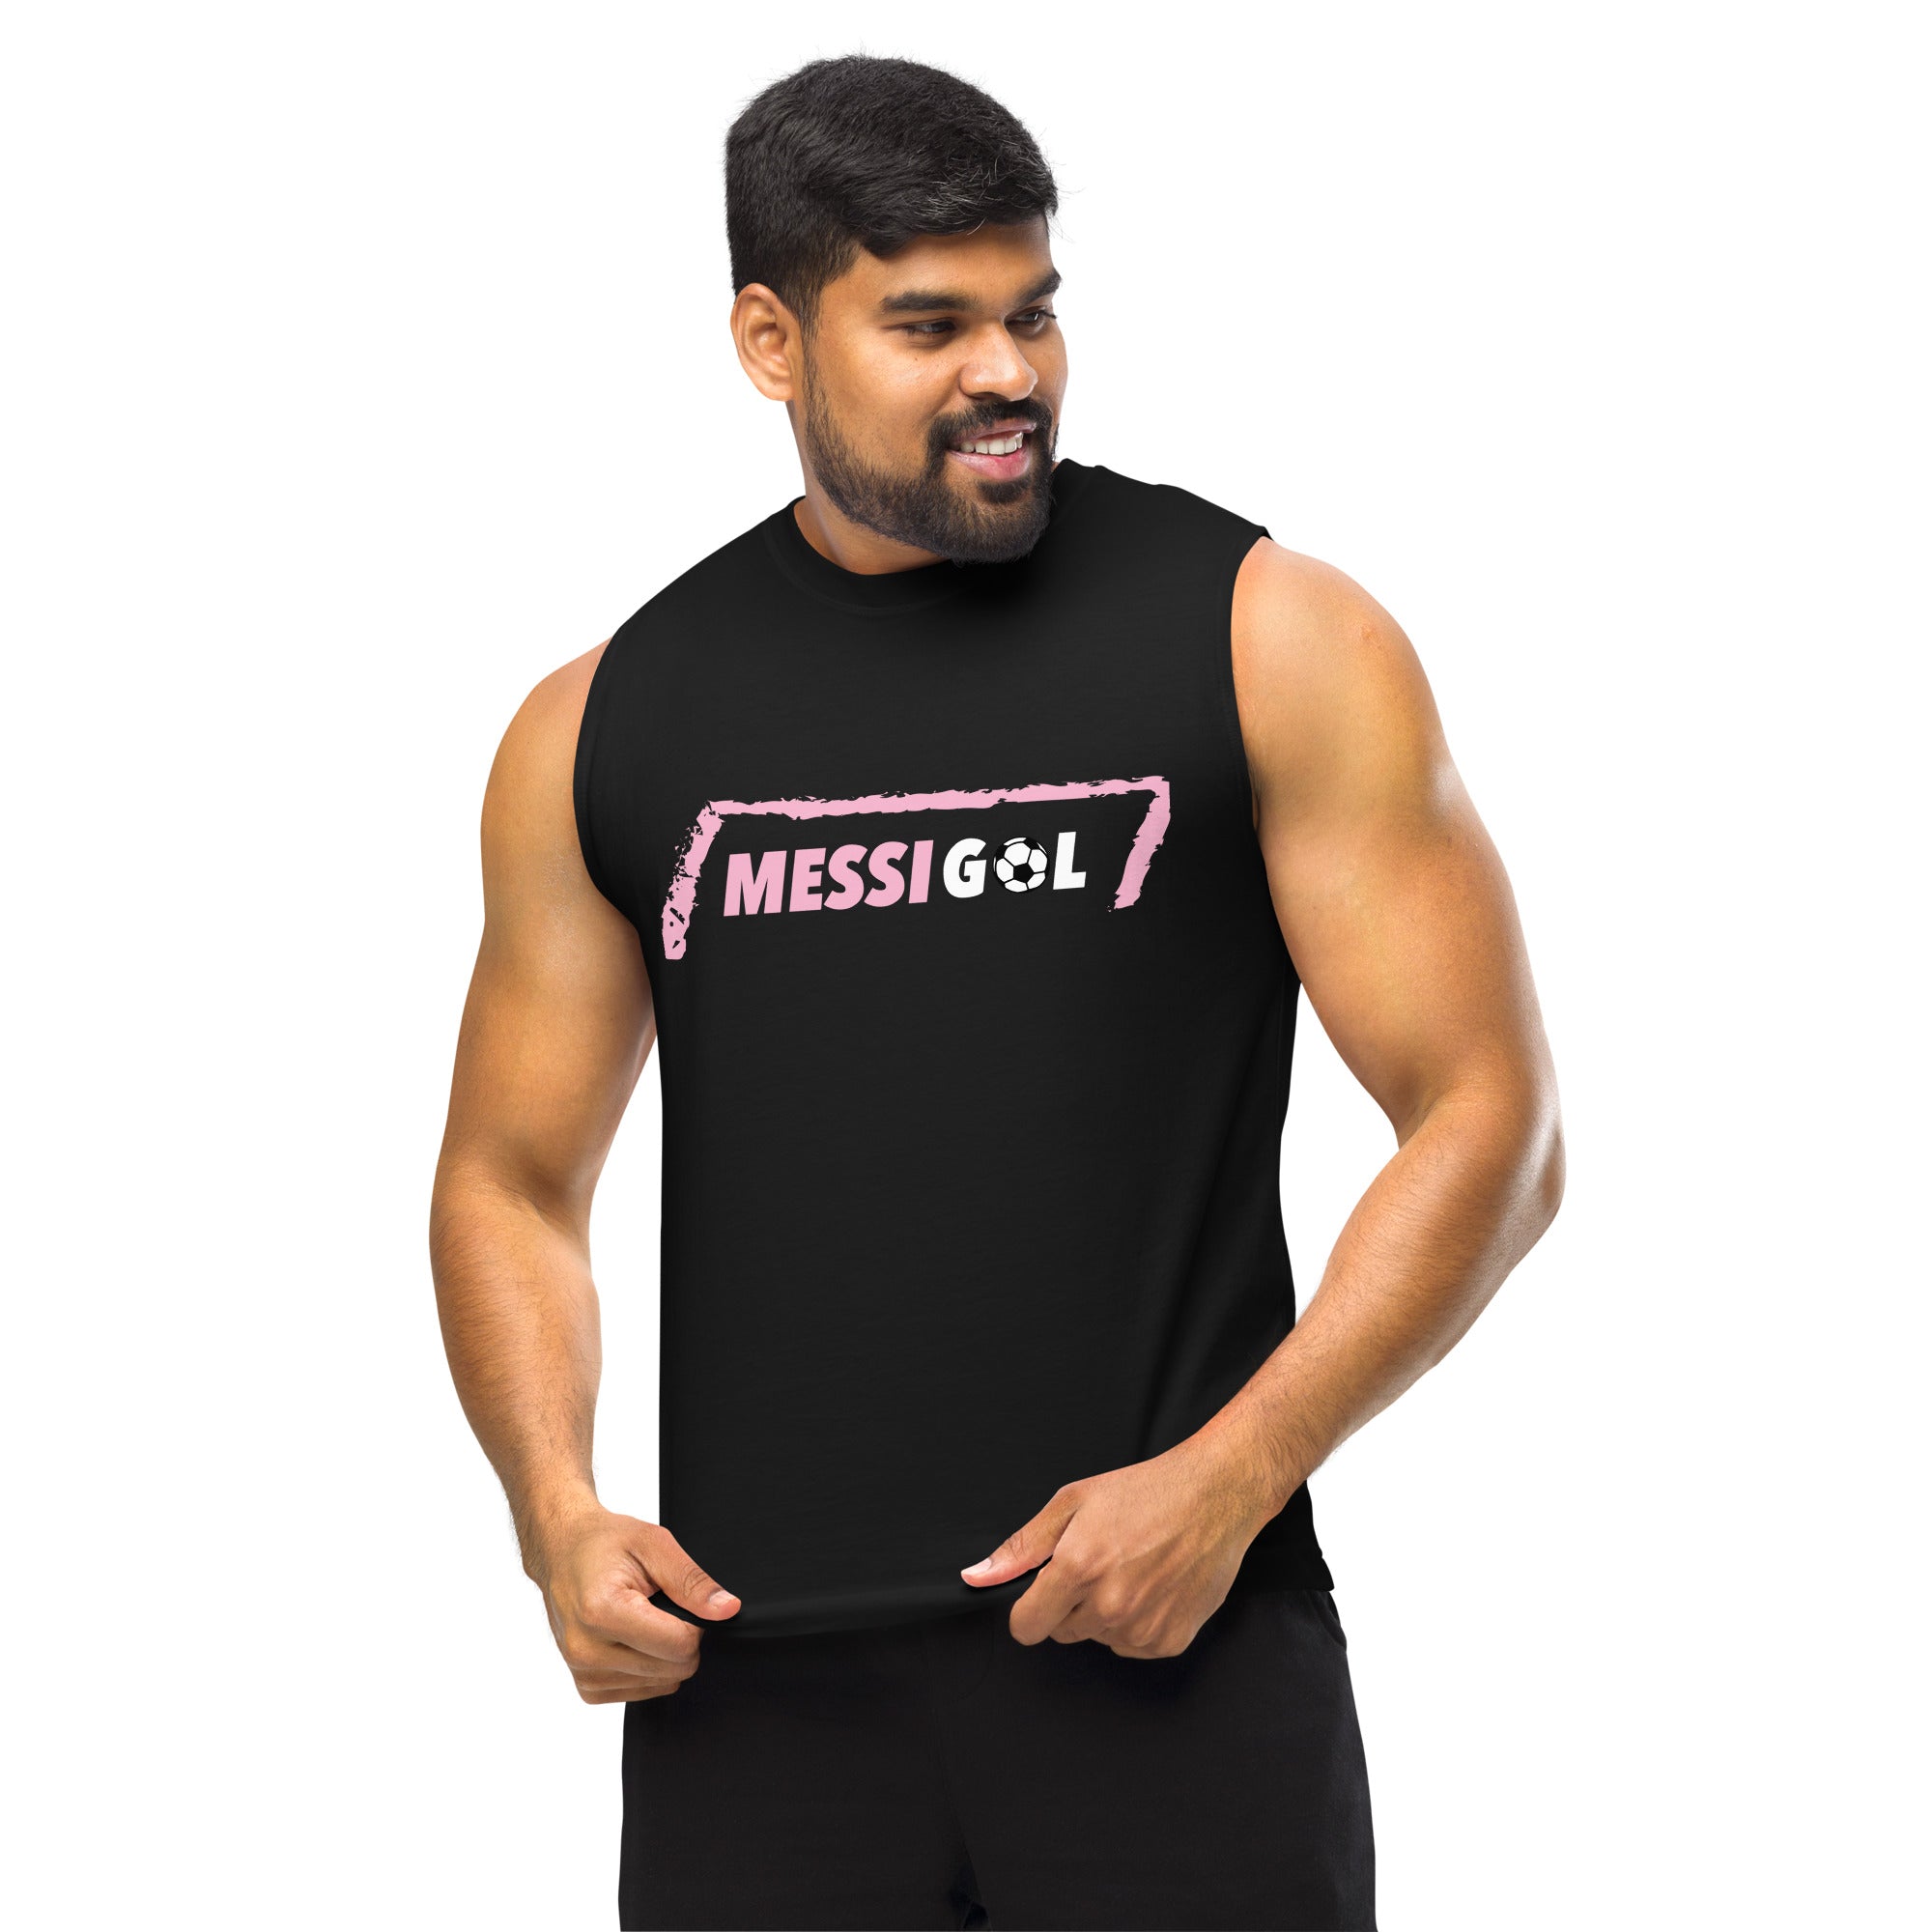 Muscle Shirt for Man, MessiGol - LOS GUSANOS